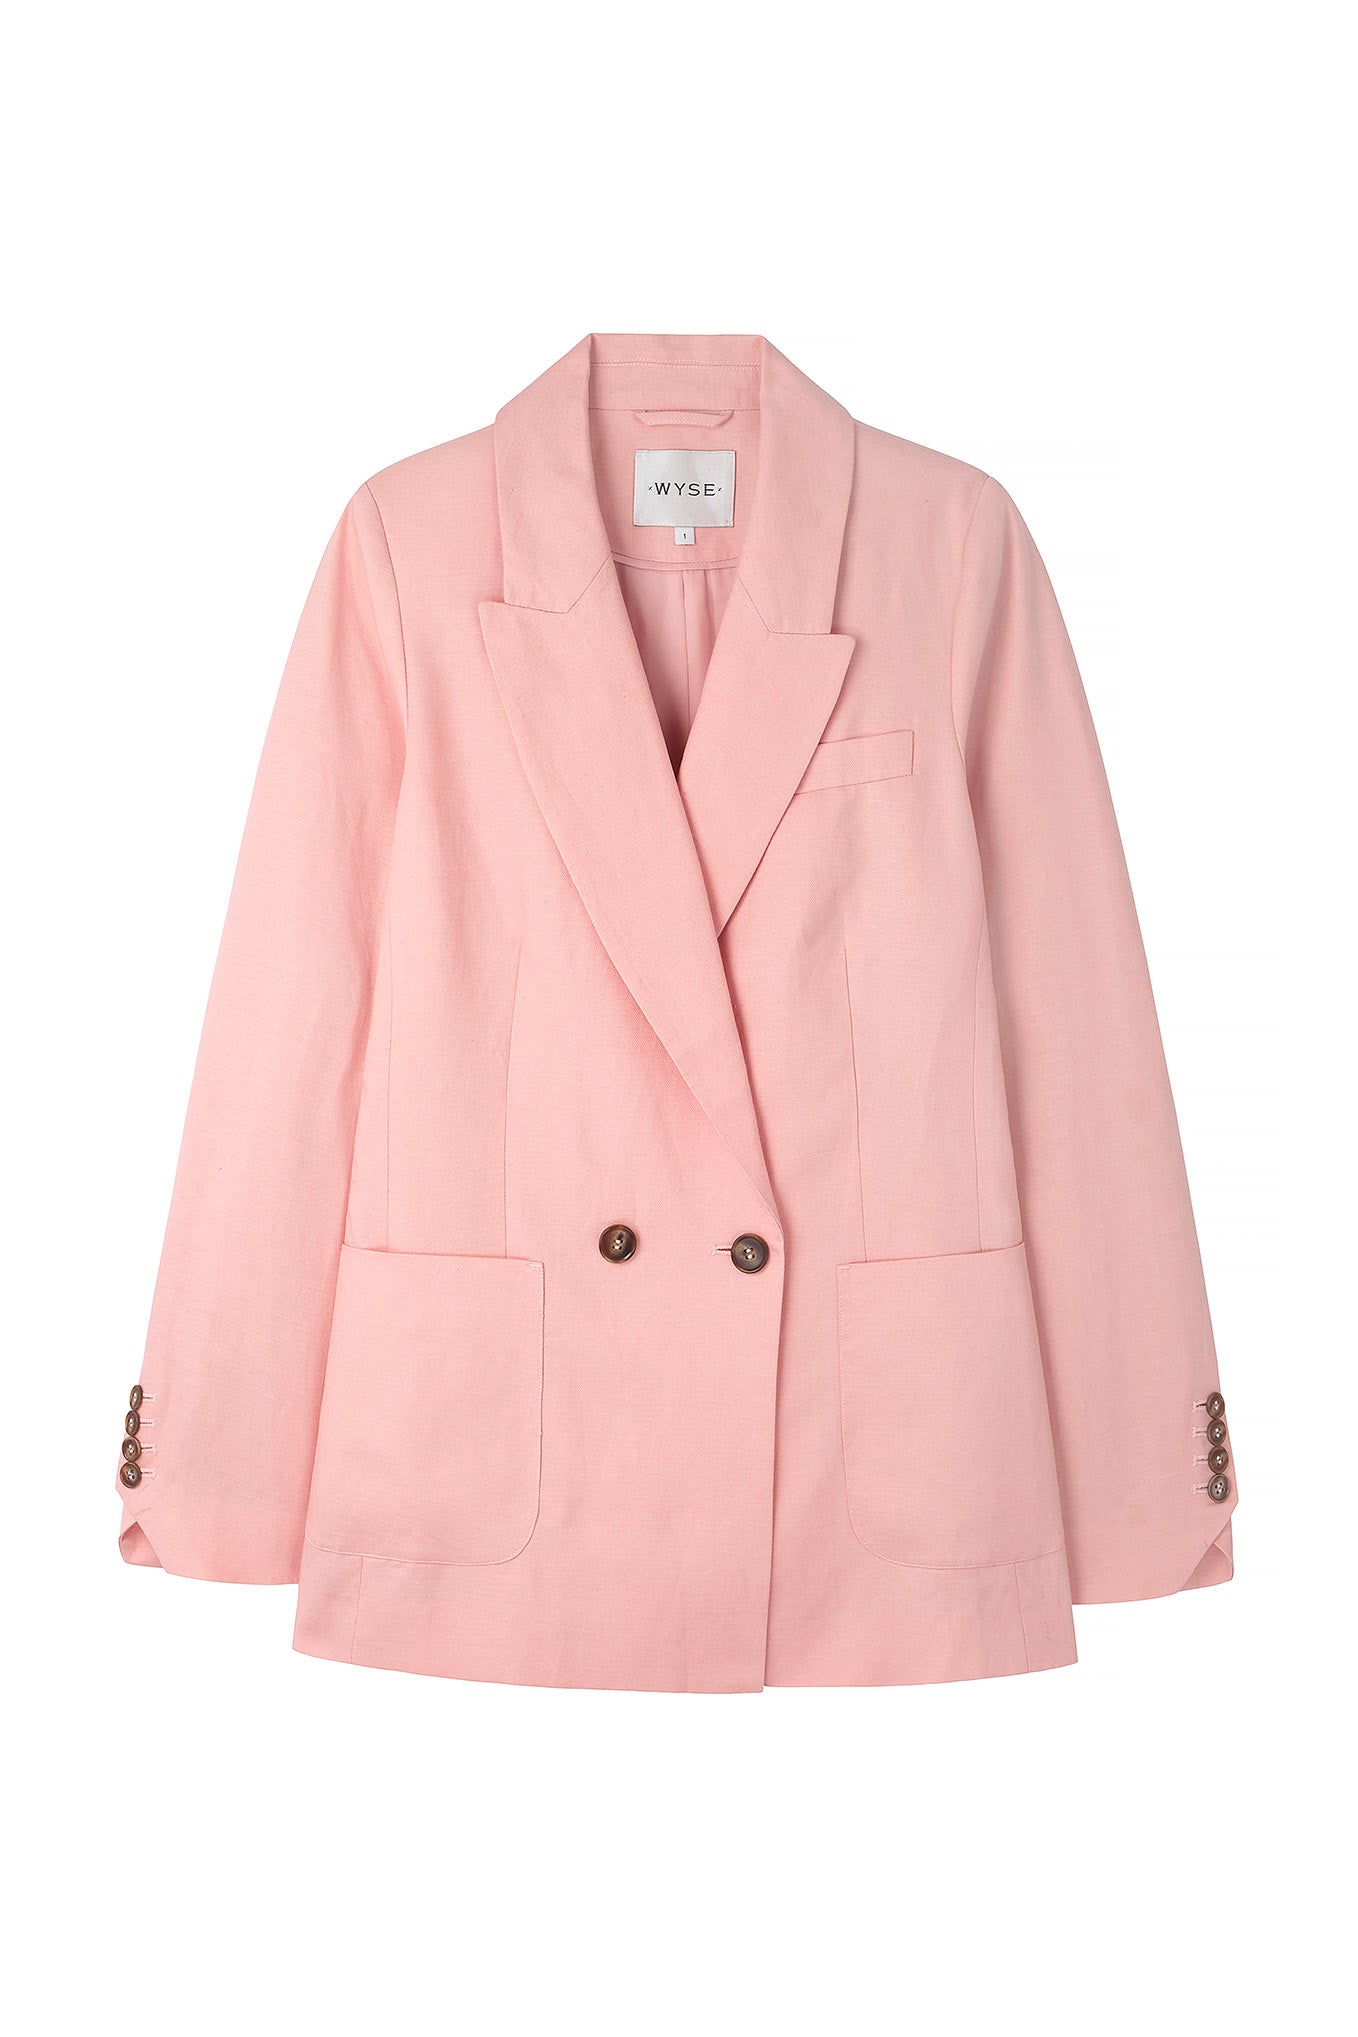 Ef X Wyse Double Breasted Blazer Pink — Wyse London